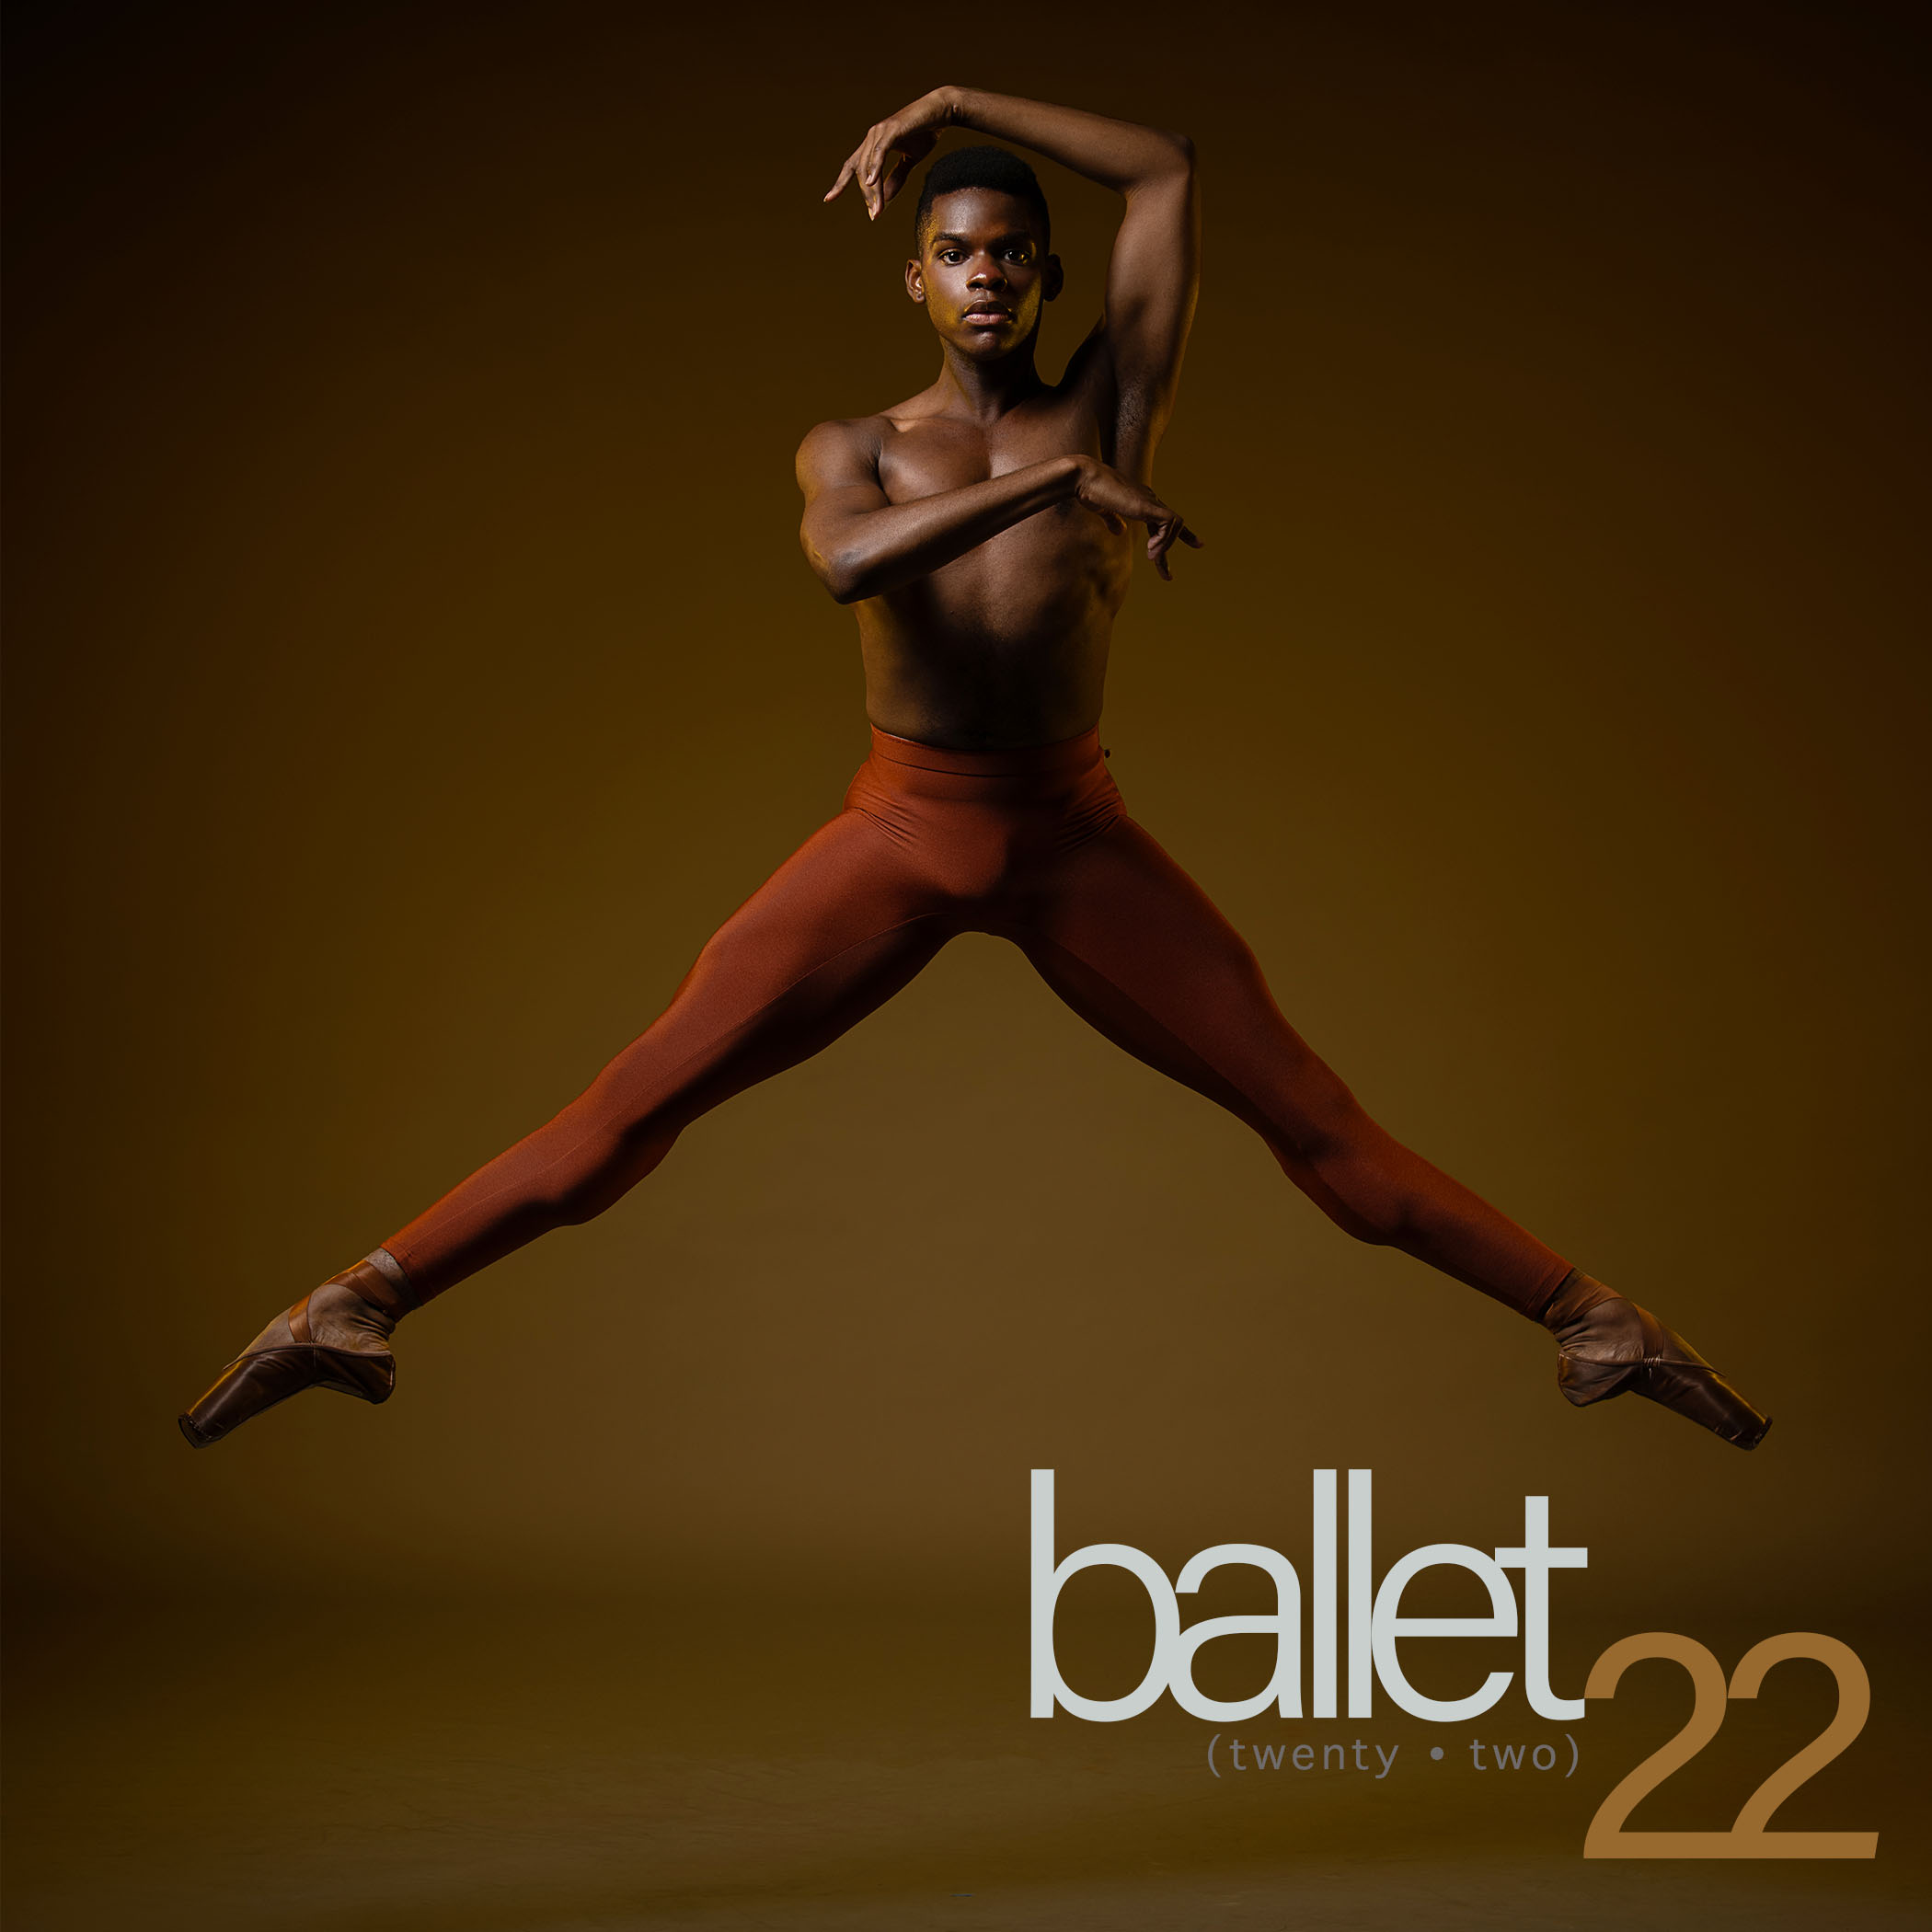 Image of Ballet22 dancer Daniel R Durrett jumps in orange tights and flesh tone pointe shoes